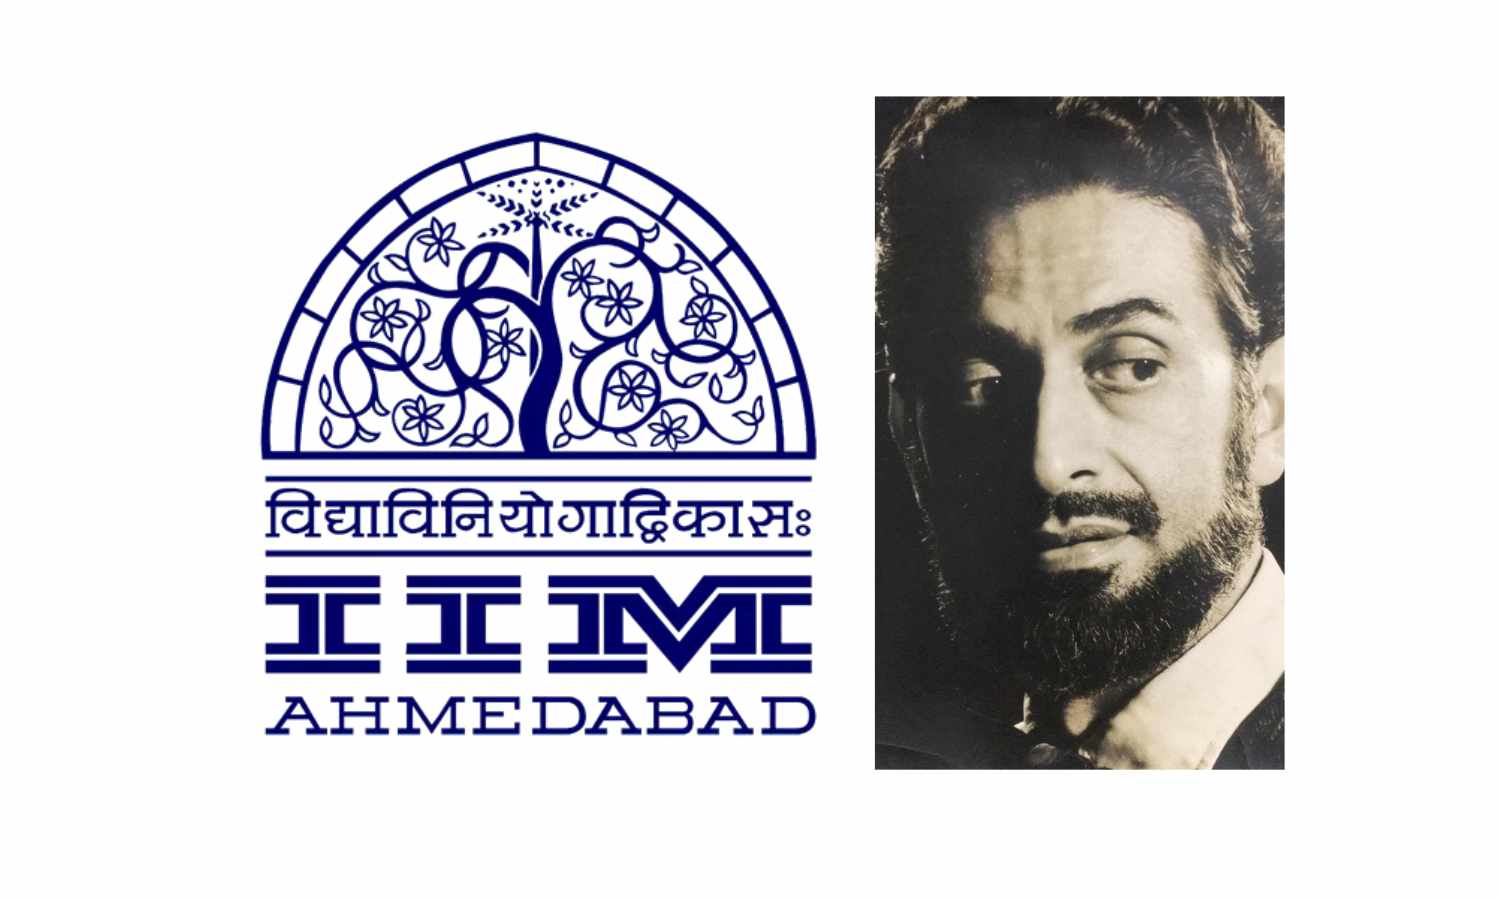 IIM A Logo and its creator Hasan Taj